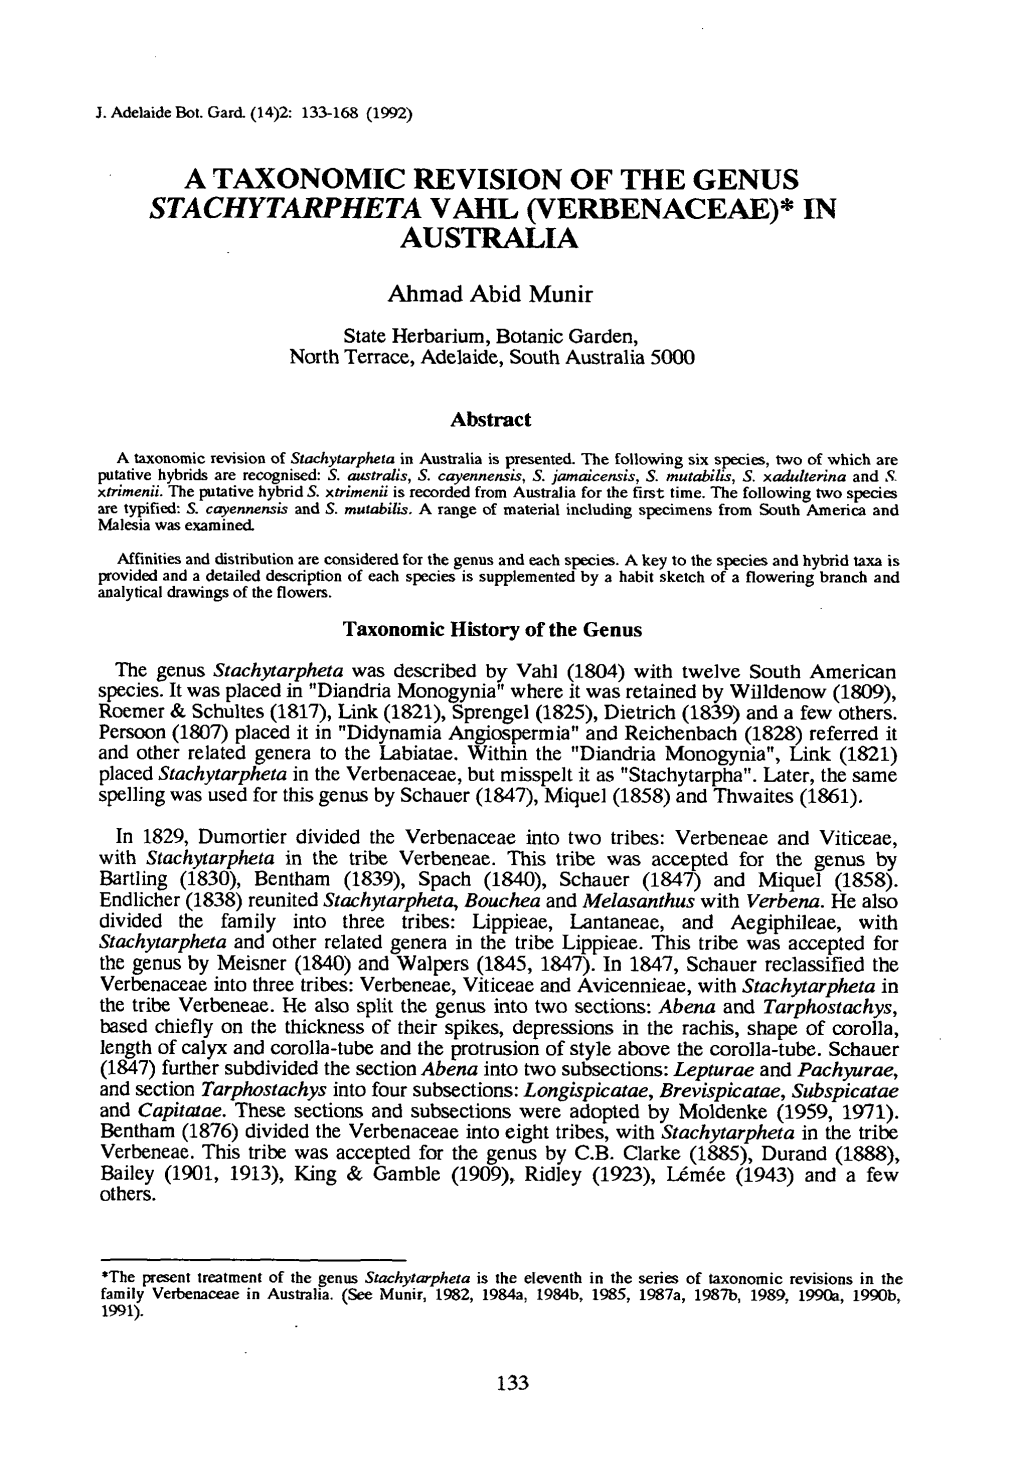 A Taxonomic Revision of the Genus Stachytarpheta Vahl (Verbenaceae)* in Australia